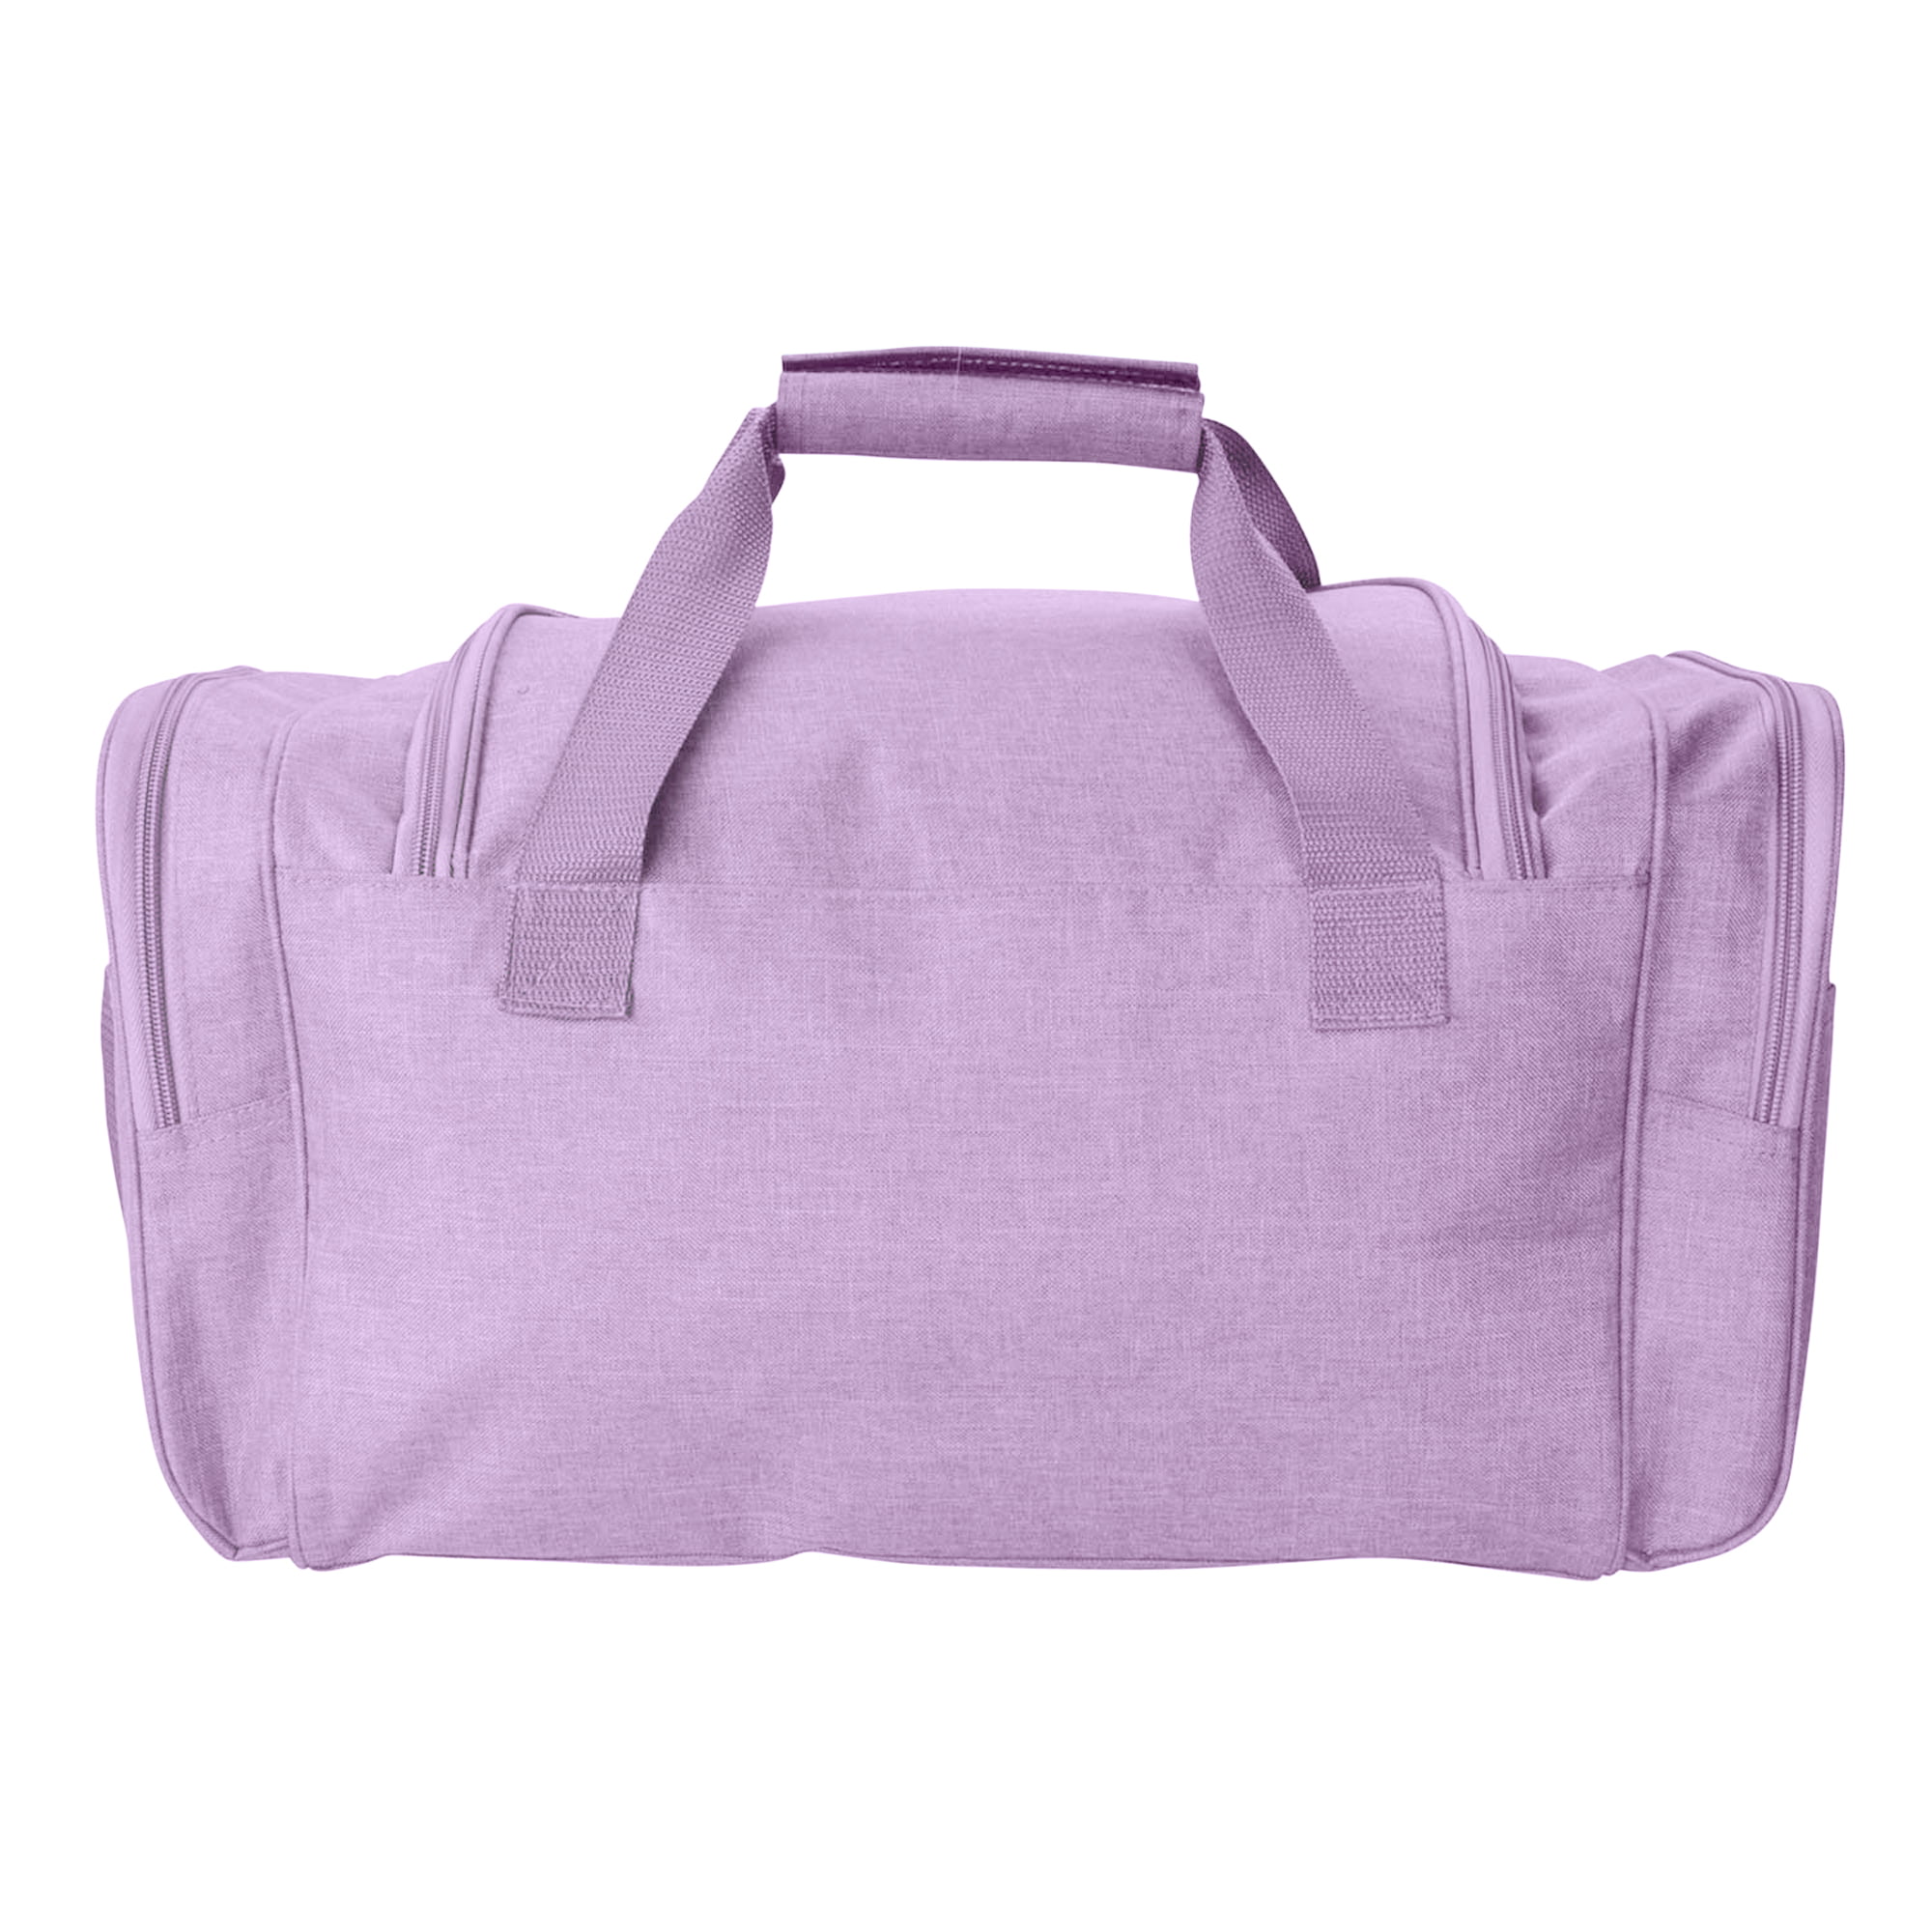 Signature Travel or Gym Duffle Bag in Purple - Walmart.com 